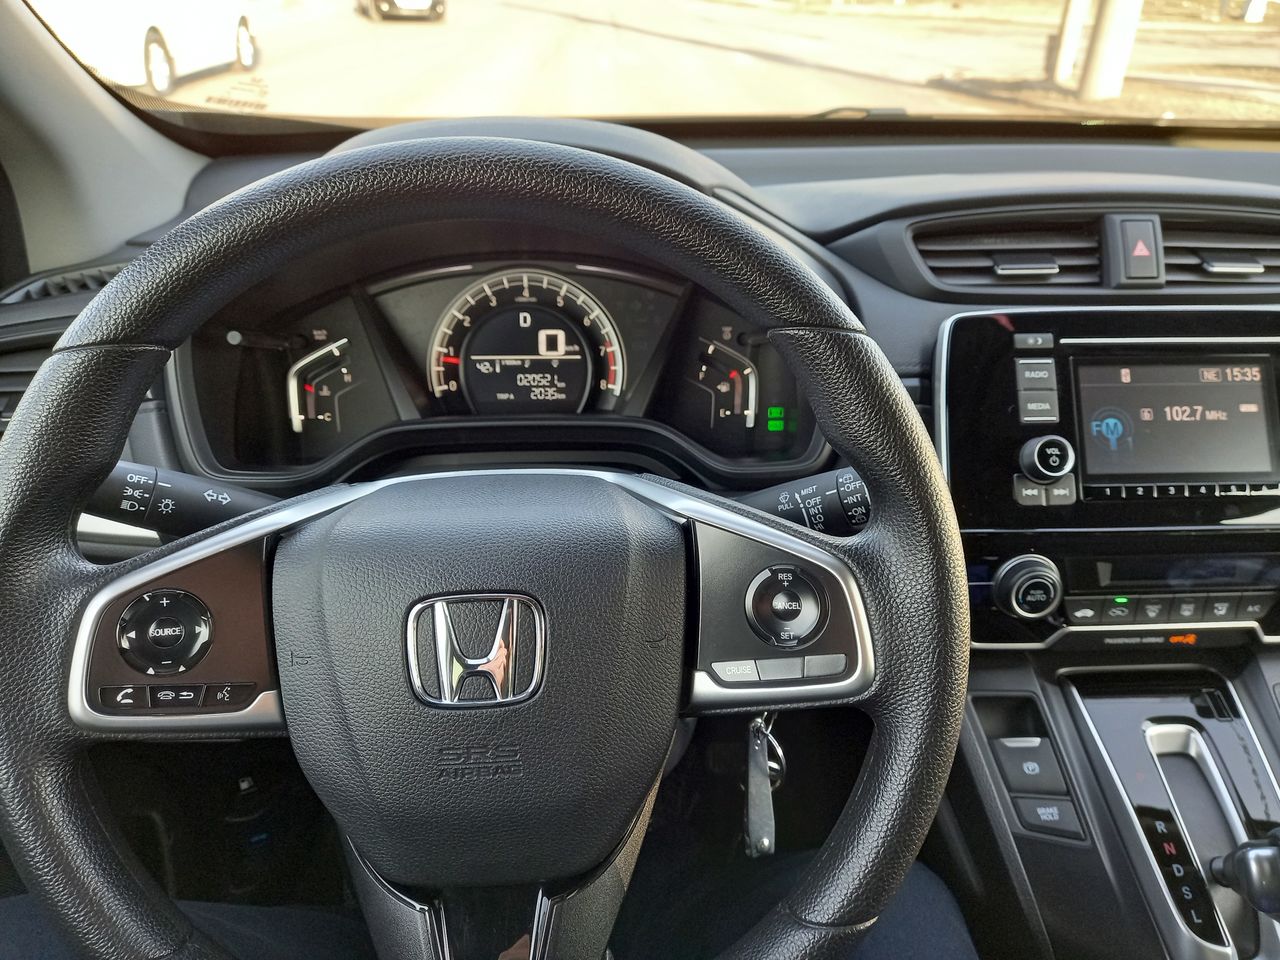 Honda CR-V foto 7